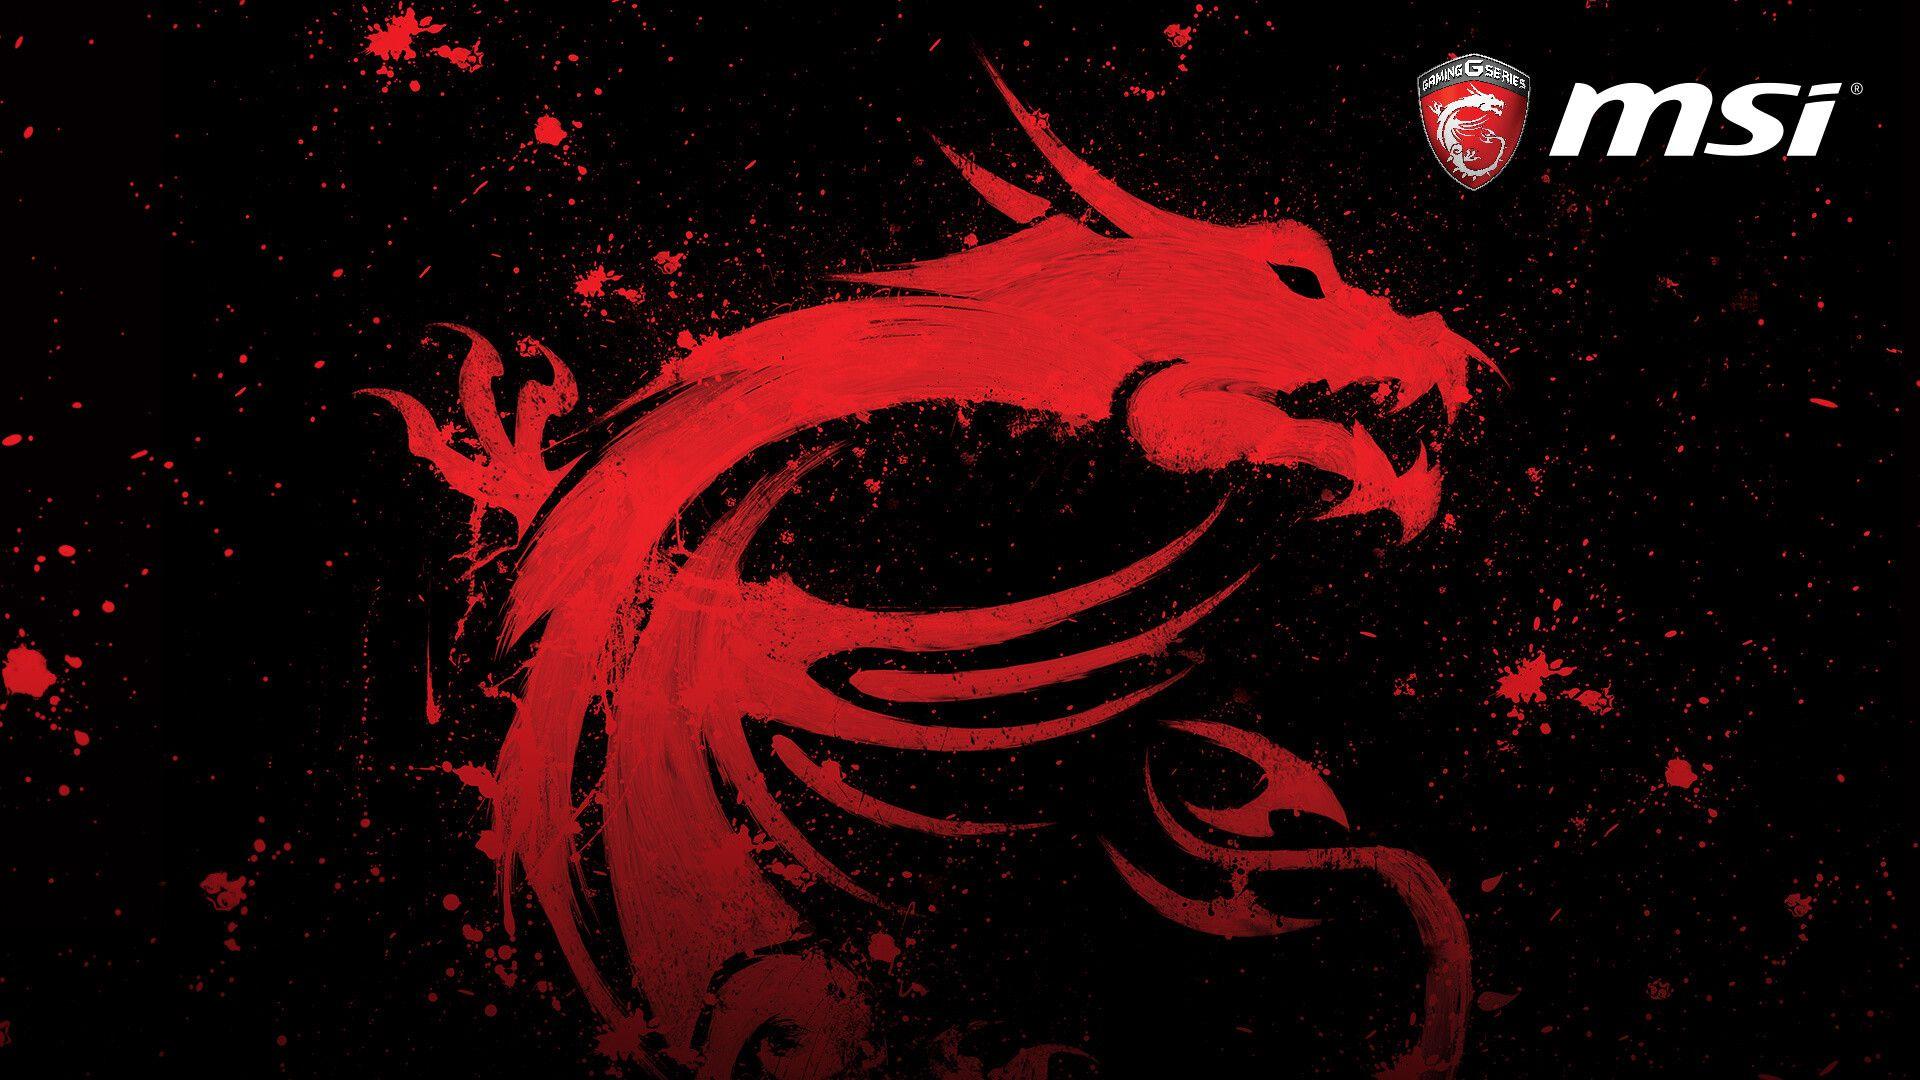 MSI Red Dragon Wallpaper